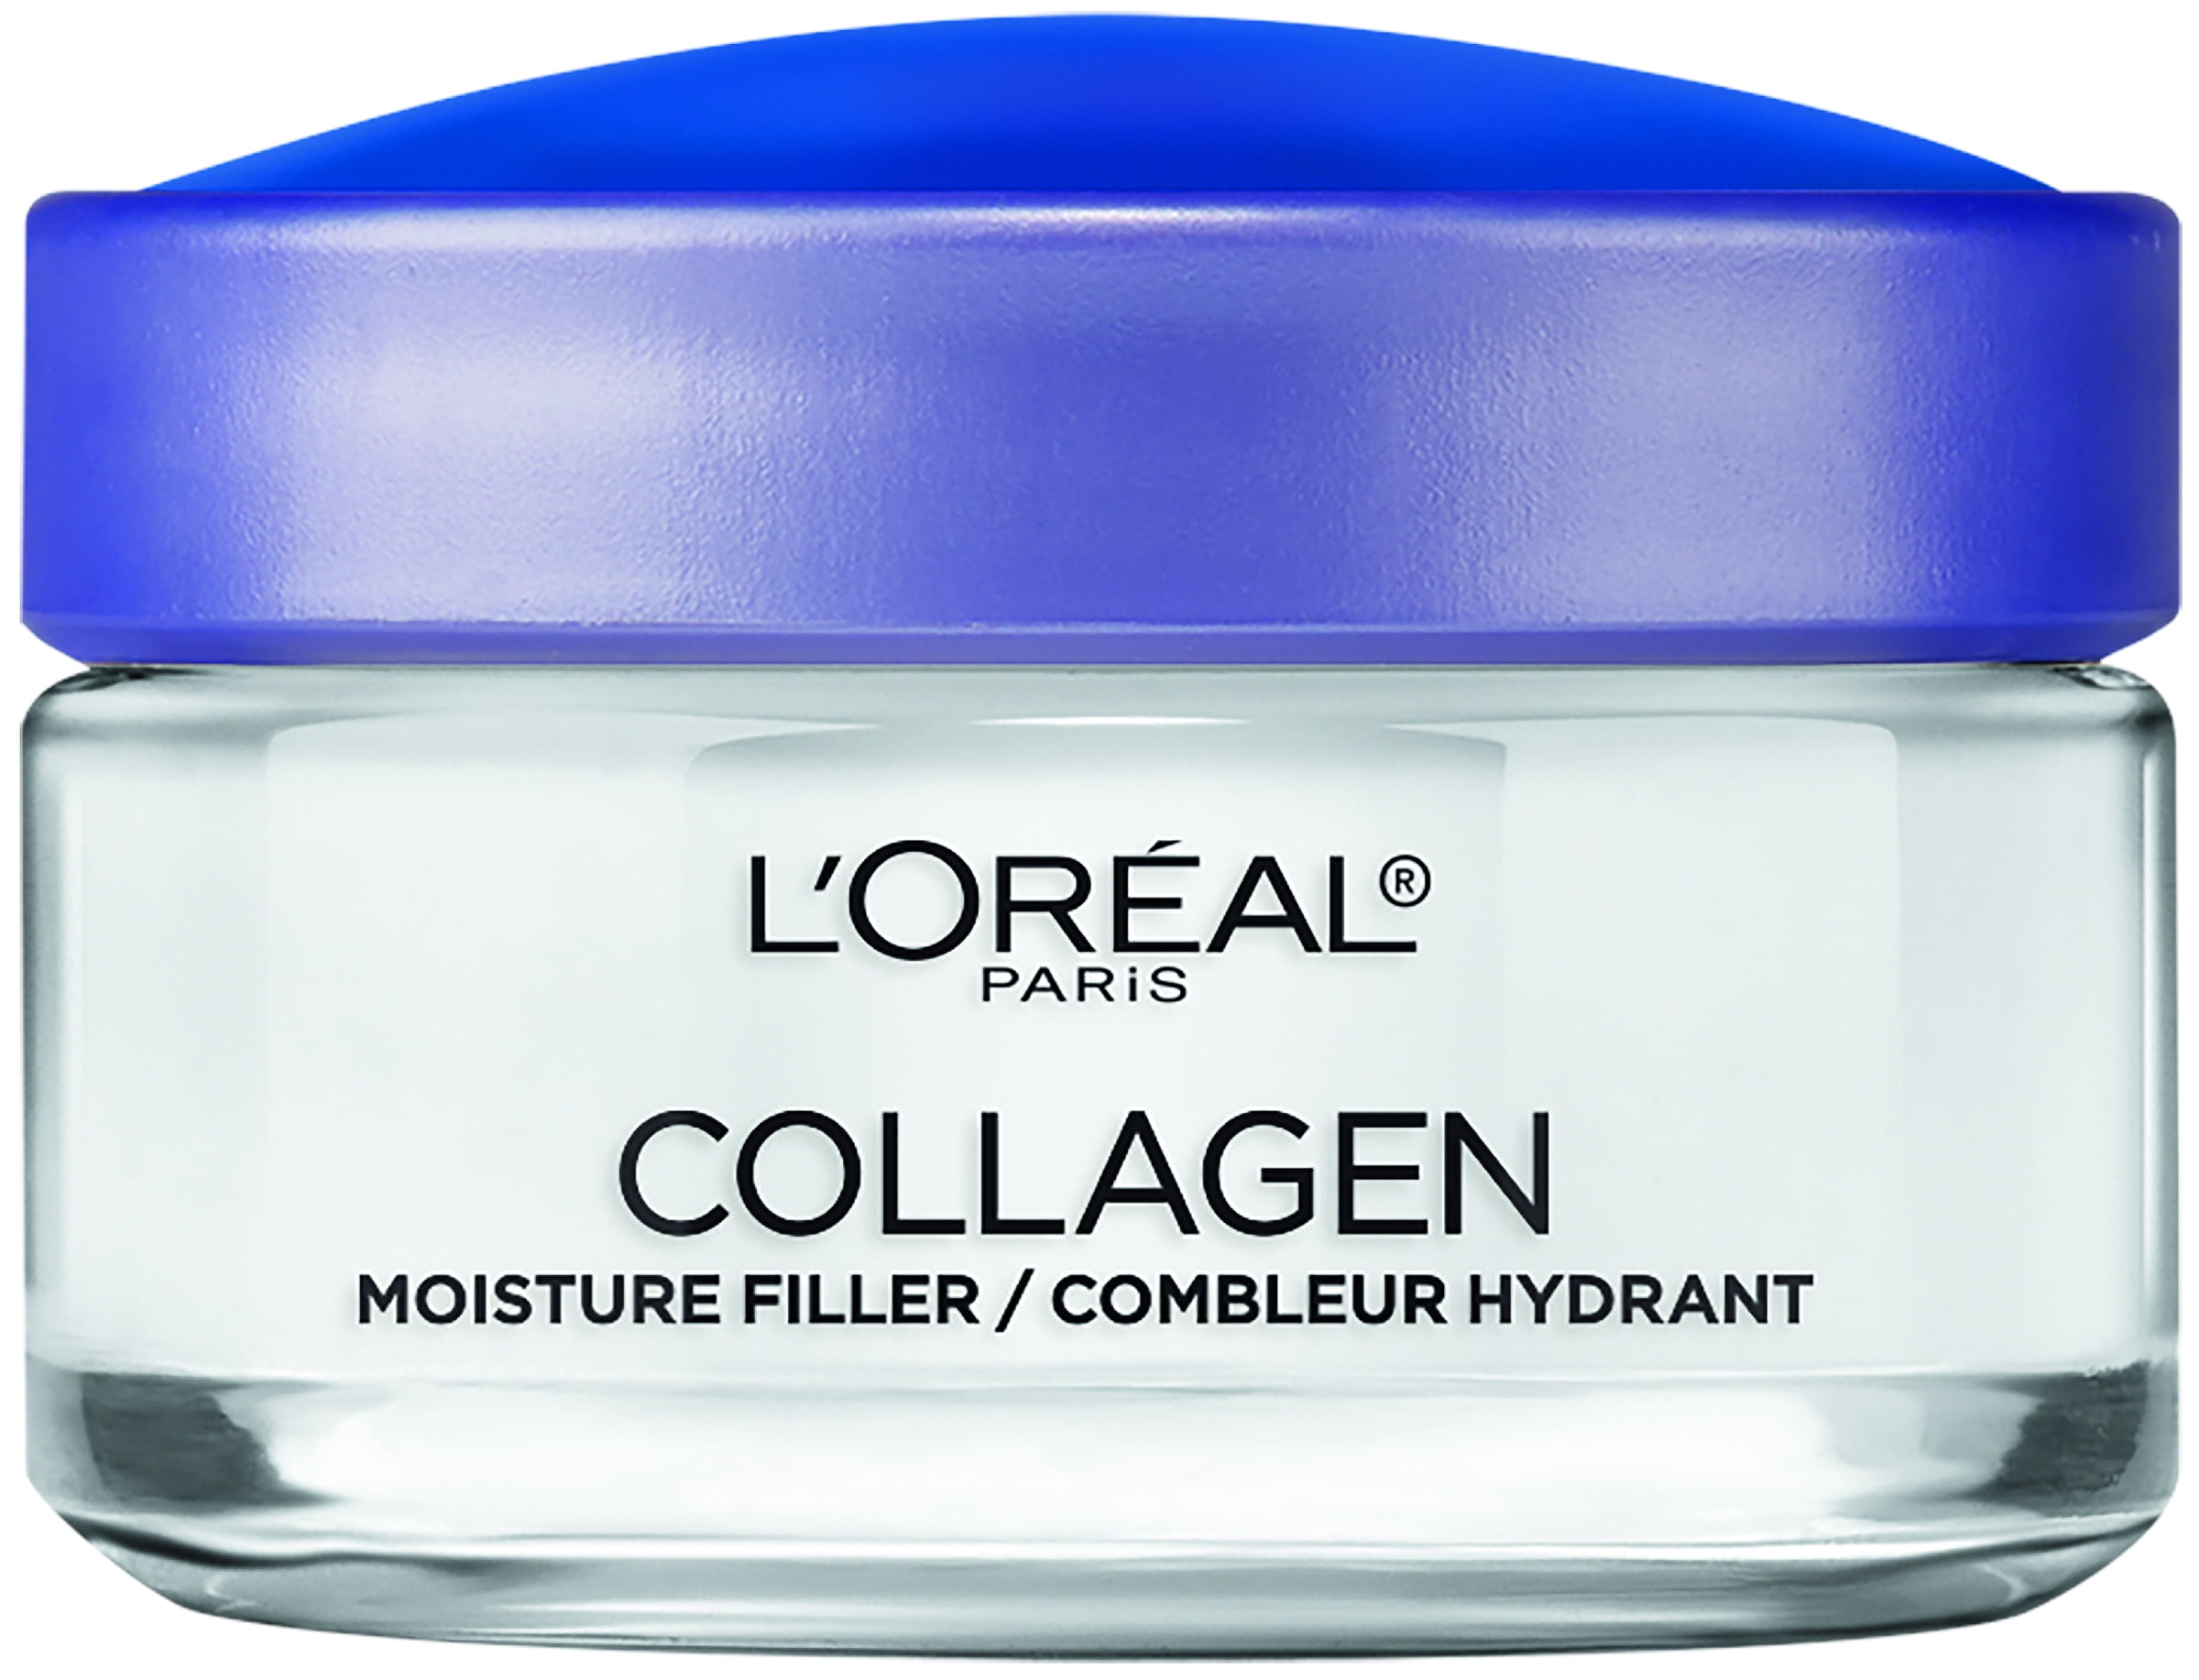 L'Oreal Paris Collagen Moisture Filler Facial Treatment Day Night Cream, Anti-Aging, 1.7 oz